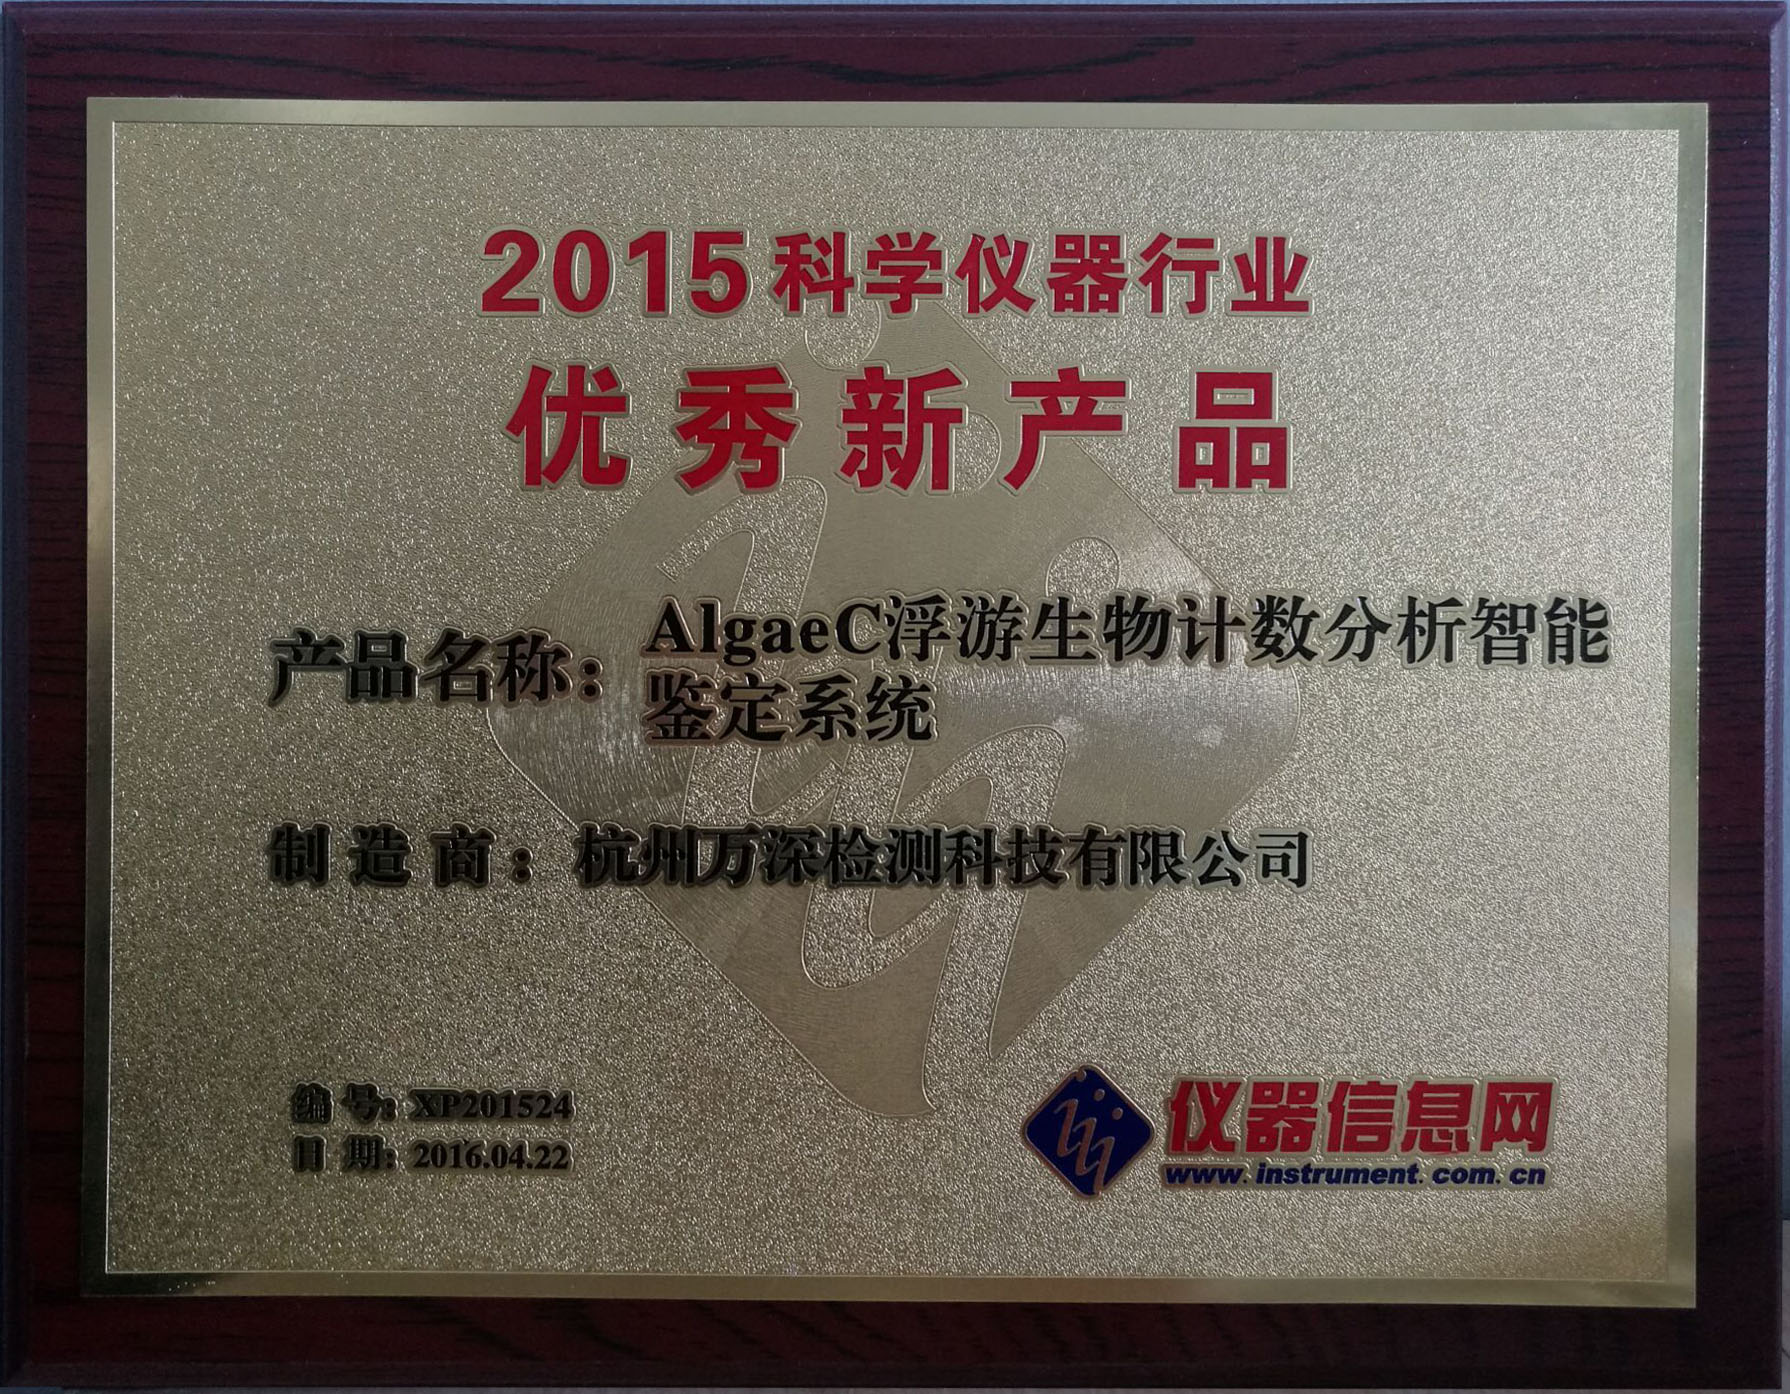 AlgaeC获“2015科学仪器行业优秀新产品”殊荣